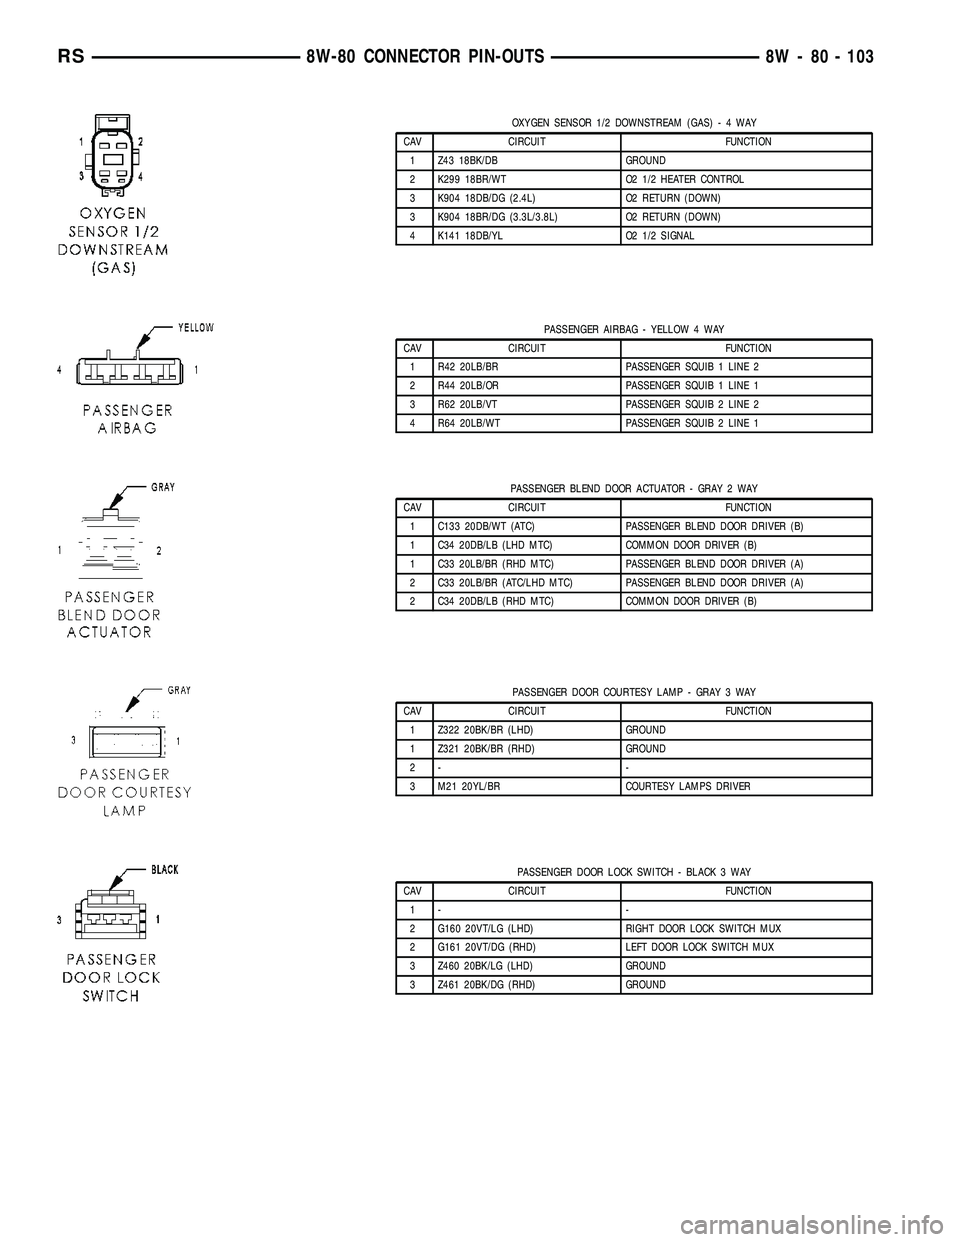 CHRYSLER VOYAGER 2004  Service Manual OXYGEN SENSOR 1/2 DOWNSTREAM (GAS)-4WAY
CAV CIRCUIT FUNCTION
1 Z43 18BK/DB GROUND
2 K299 18BR/WT O2 1/2 HEATER CONTROL
3 K904 18DB/DG (2.4L) O2 RETURN (DOWN)
3 K904 18BR/DG (3.3L/3.8L) O2 RETURN (DOWN